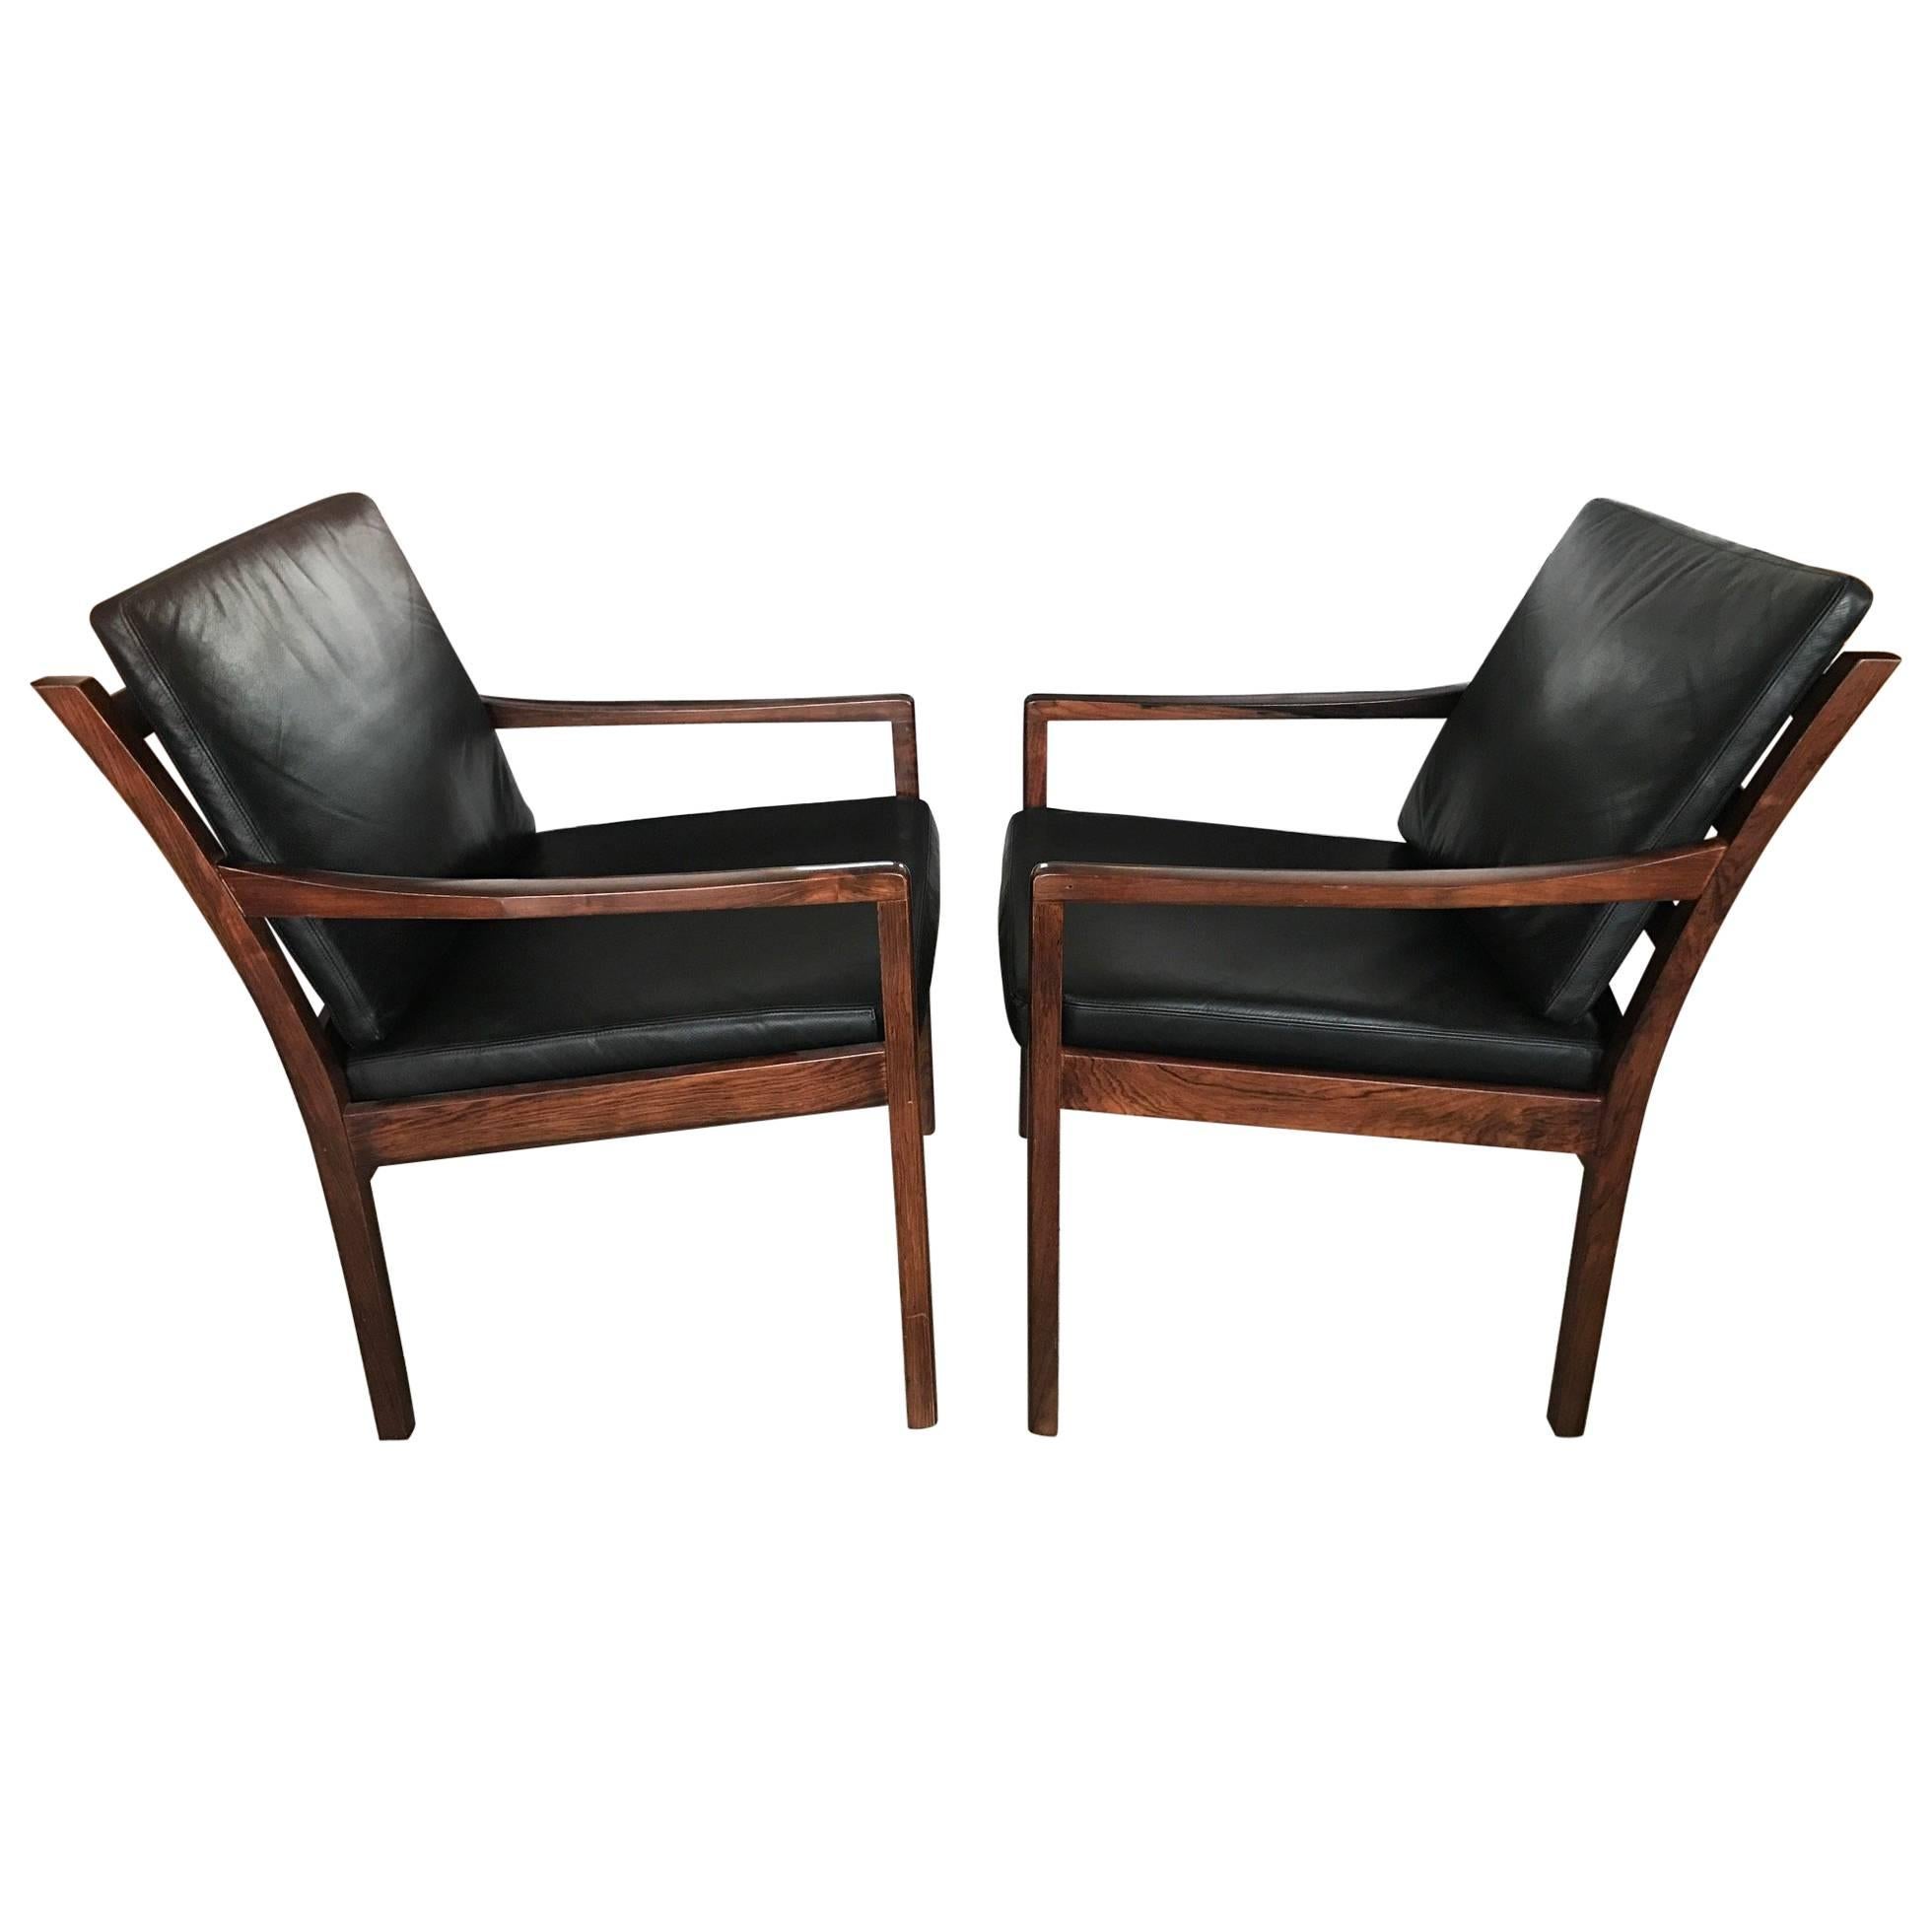 Pair of Fredrik Kayser Rosewood Chairs